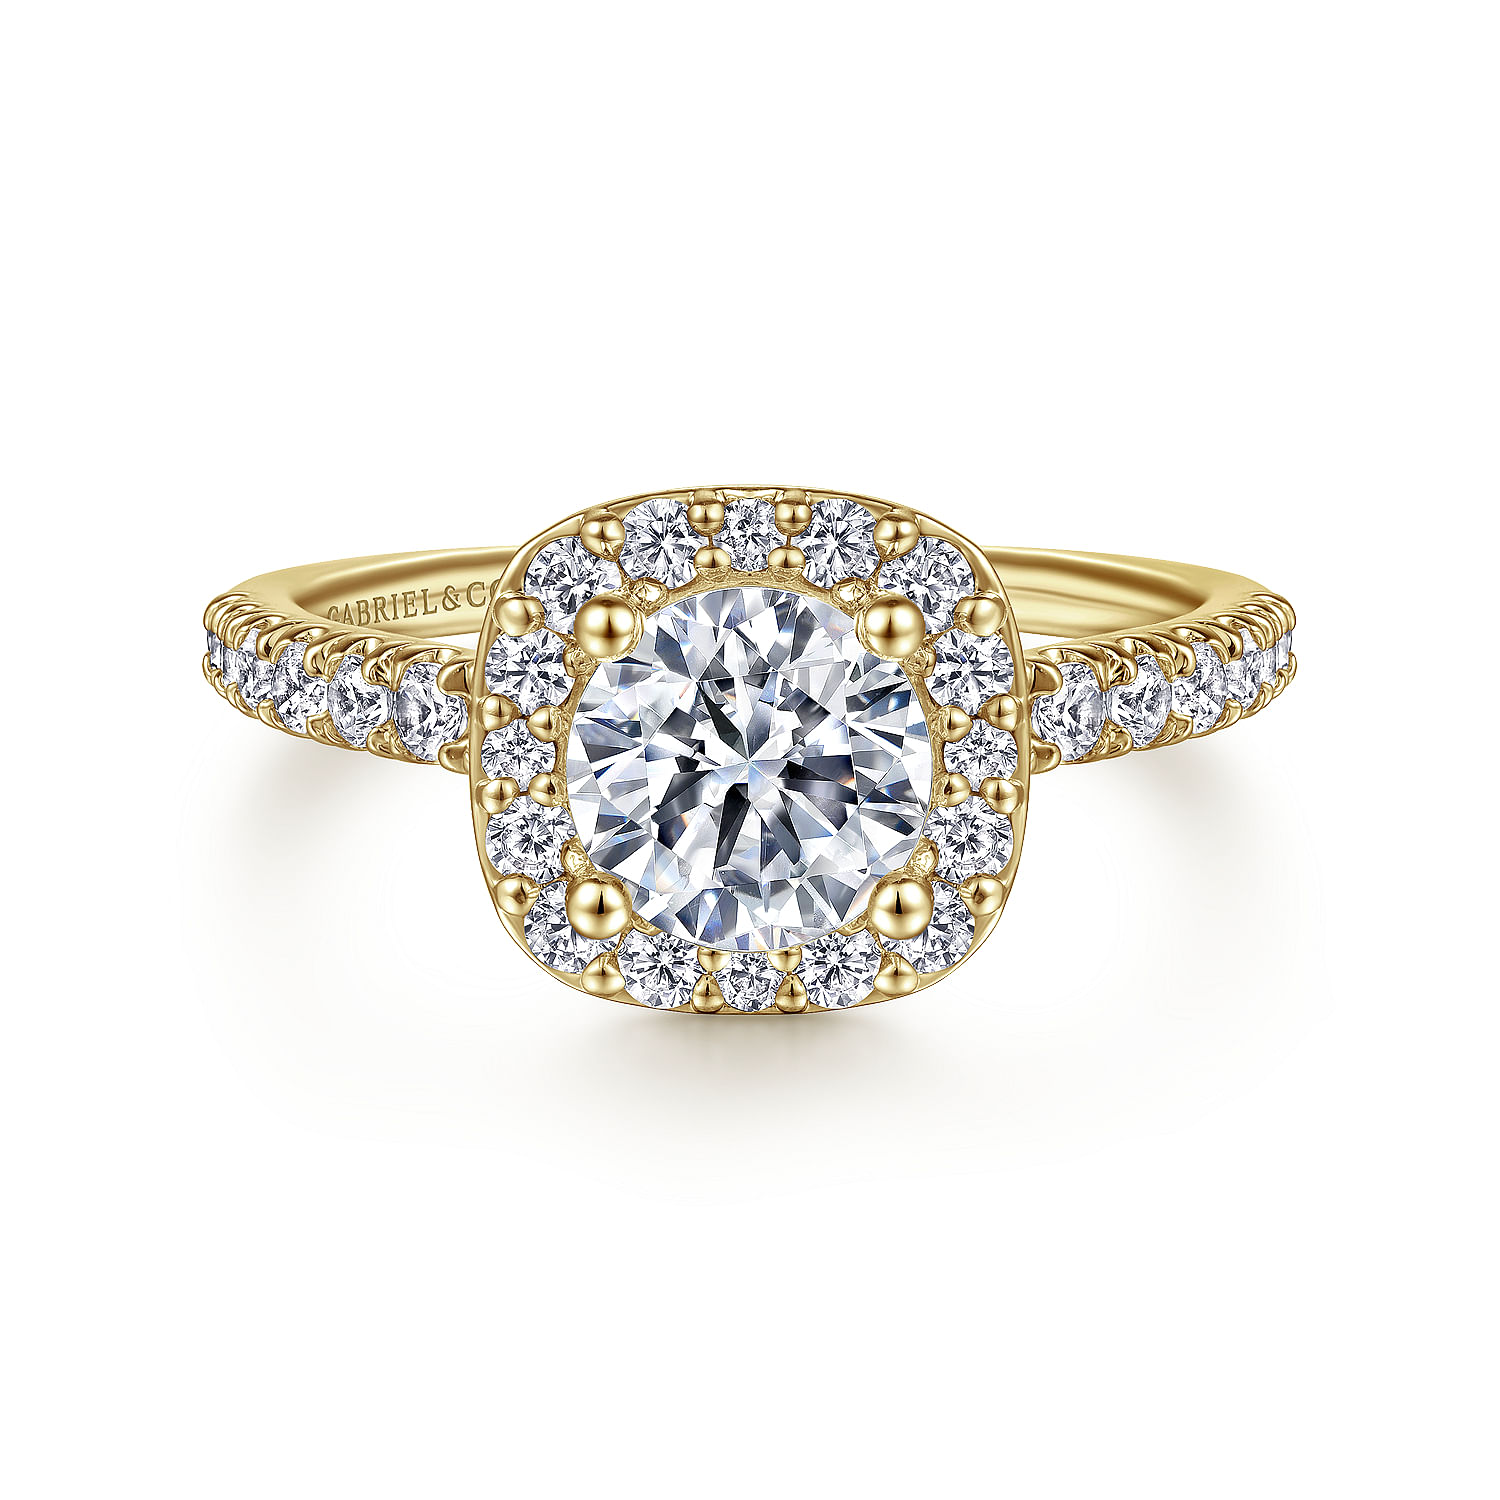 Gabriel - 14K Yellow Gold Cushion Halo Round Diamond Engagement Ring